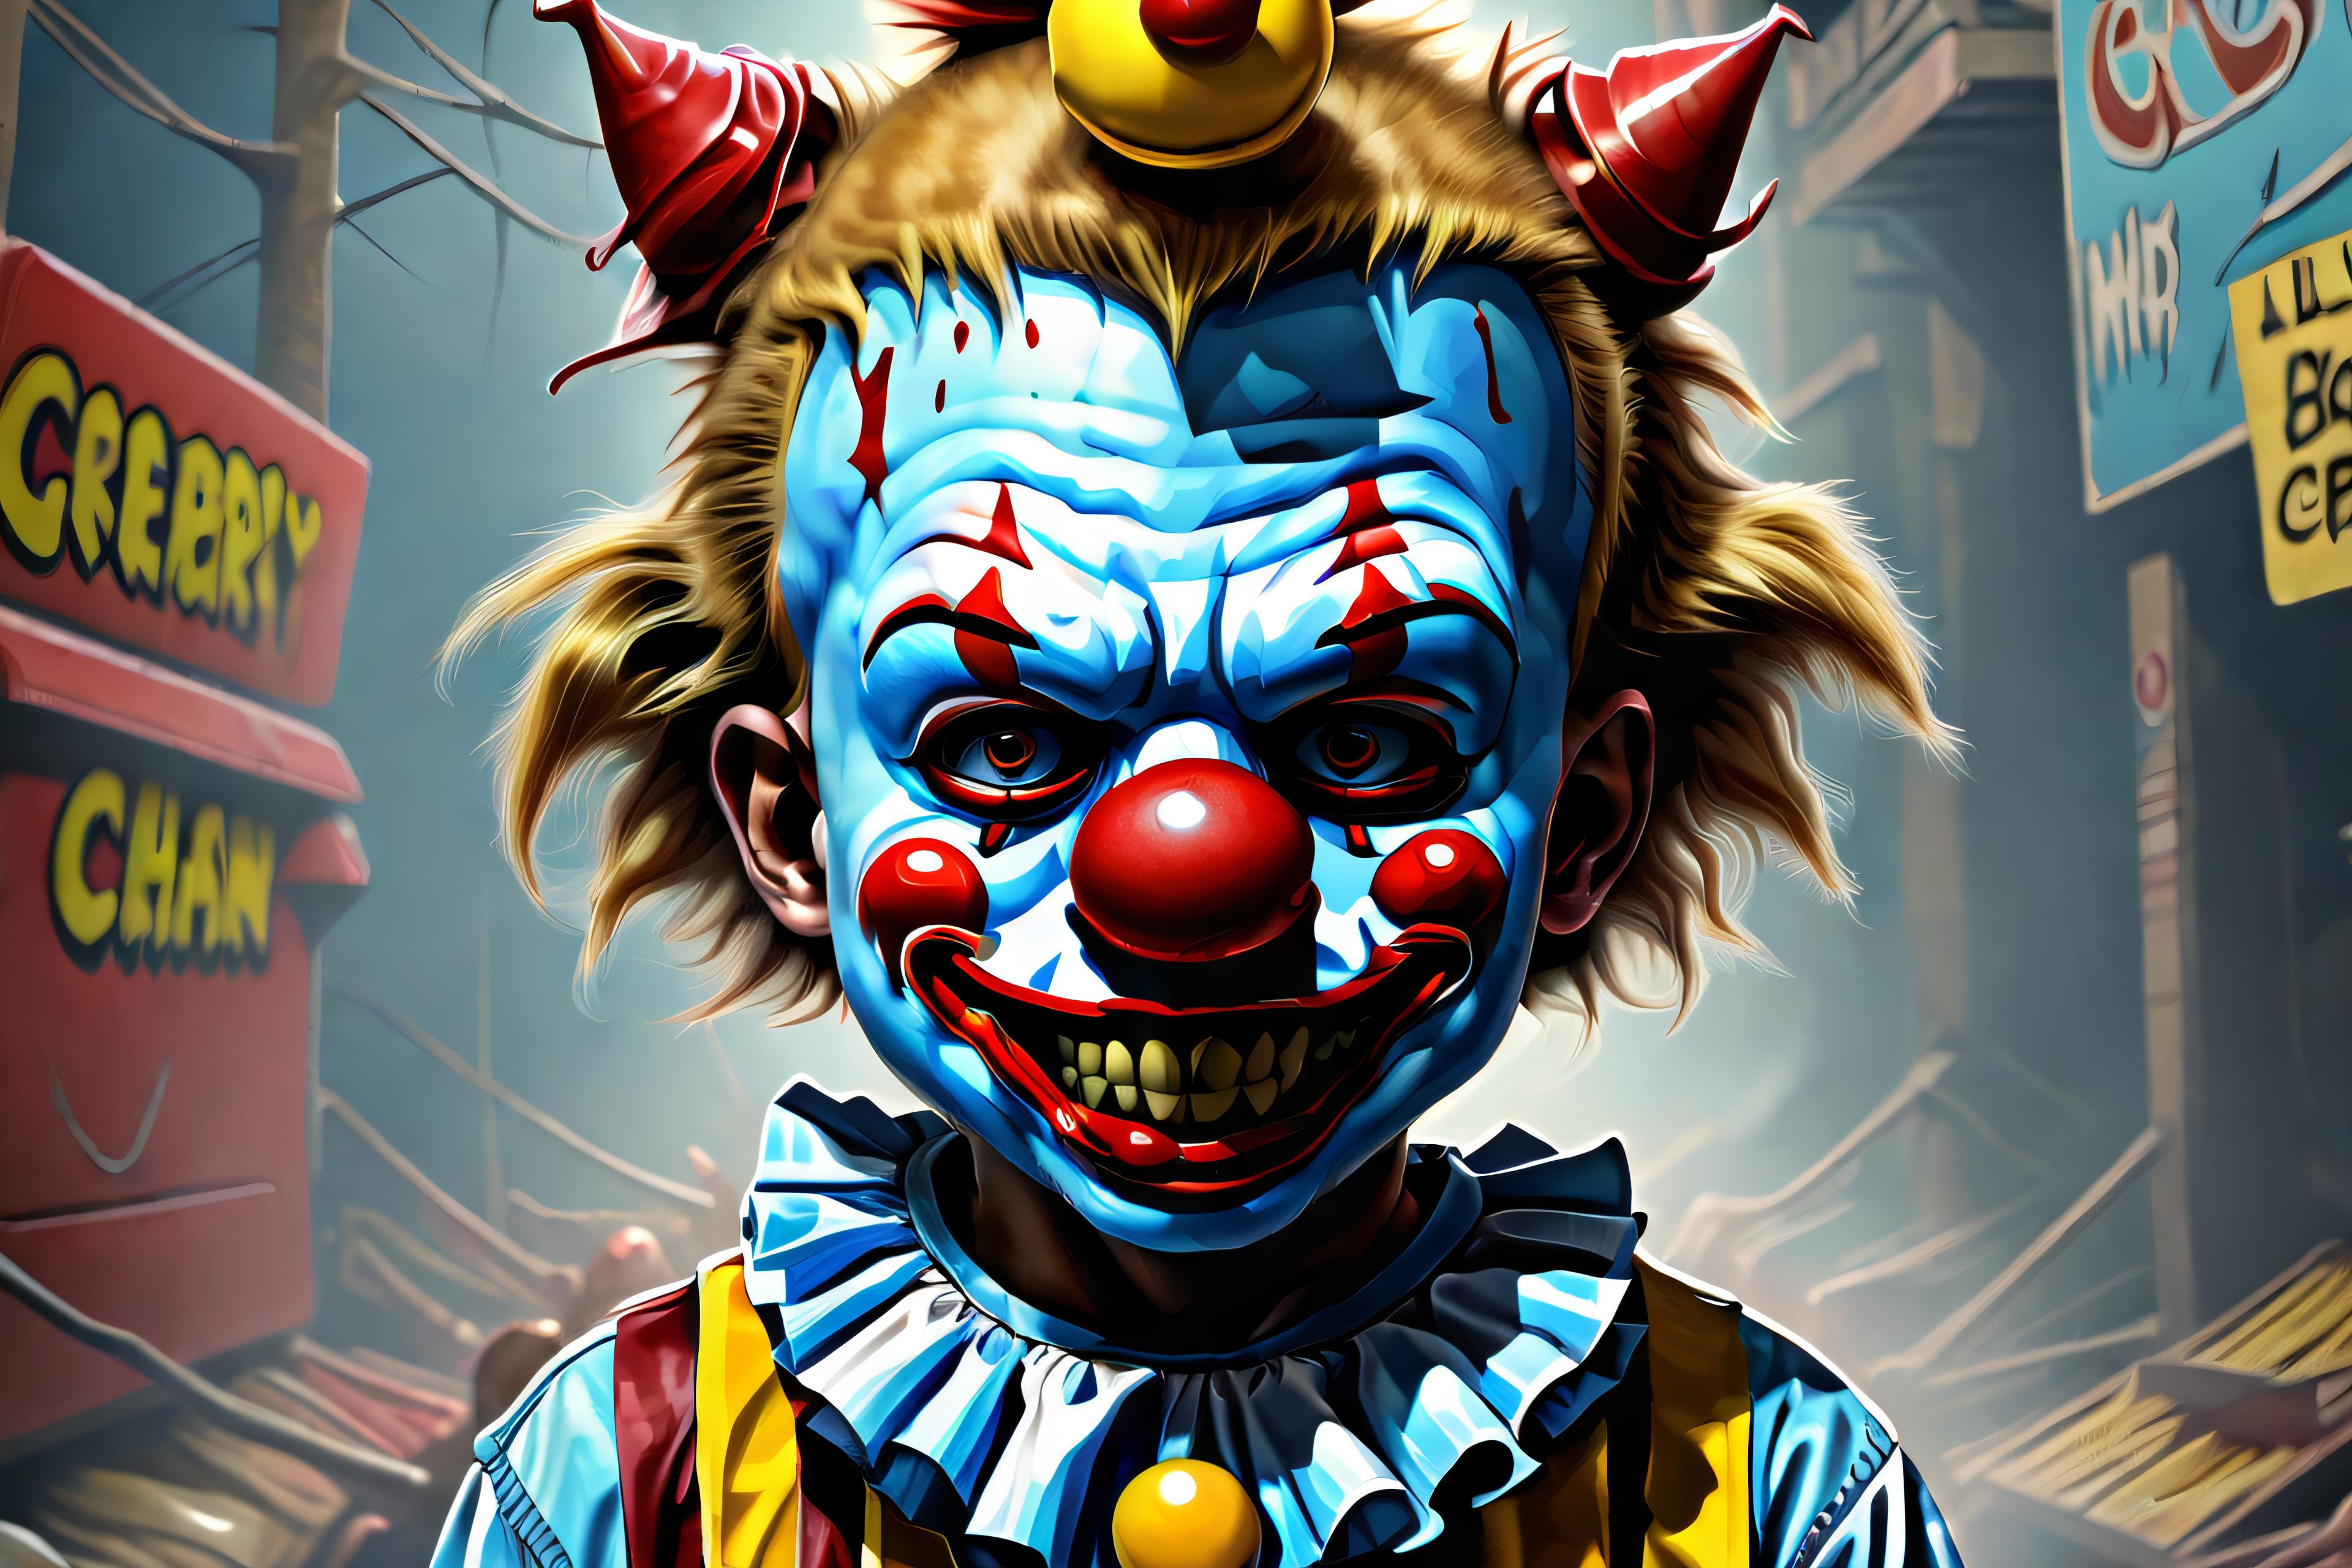 Clown Boy image by patricktoba